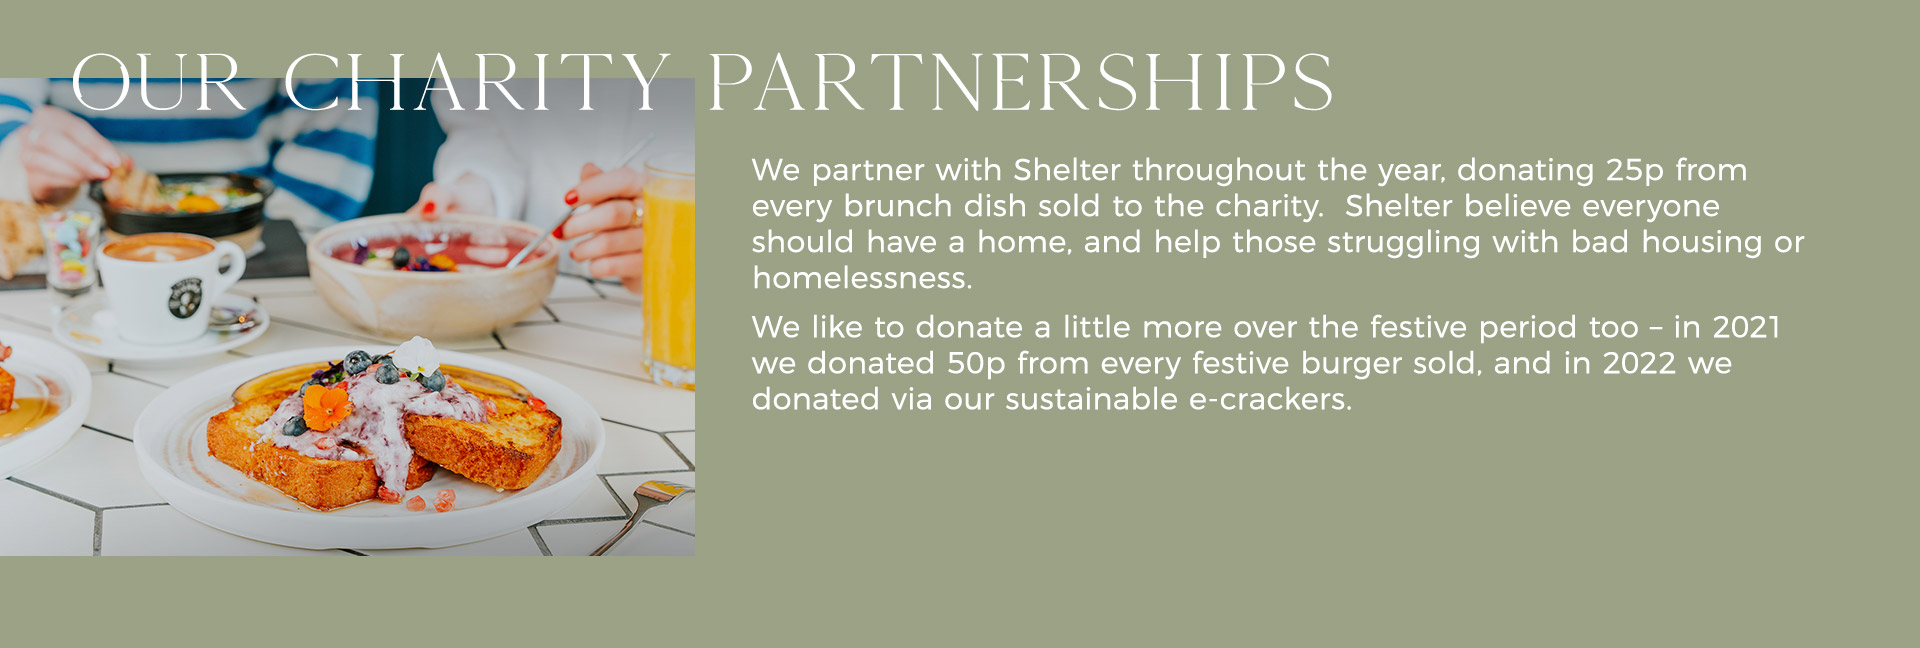 abo-our-charity-partnerships-sb.jpg